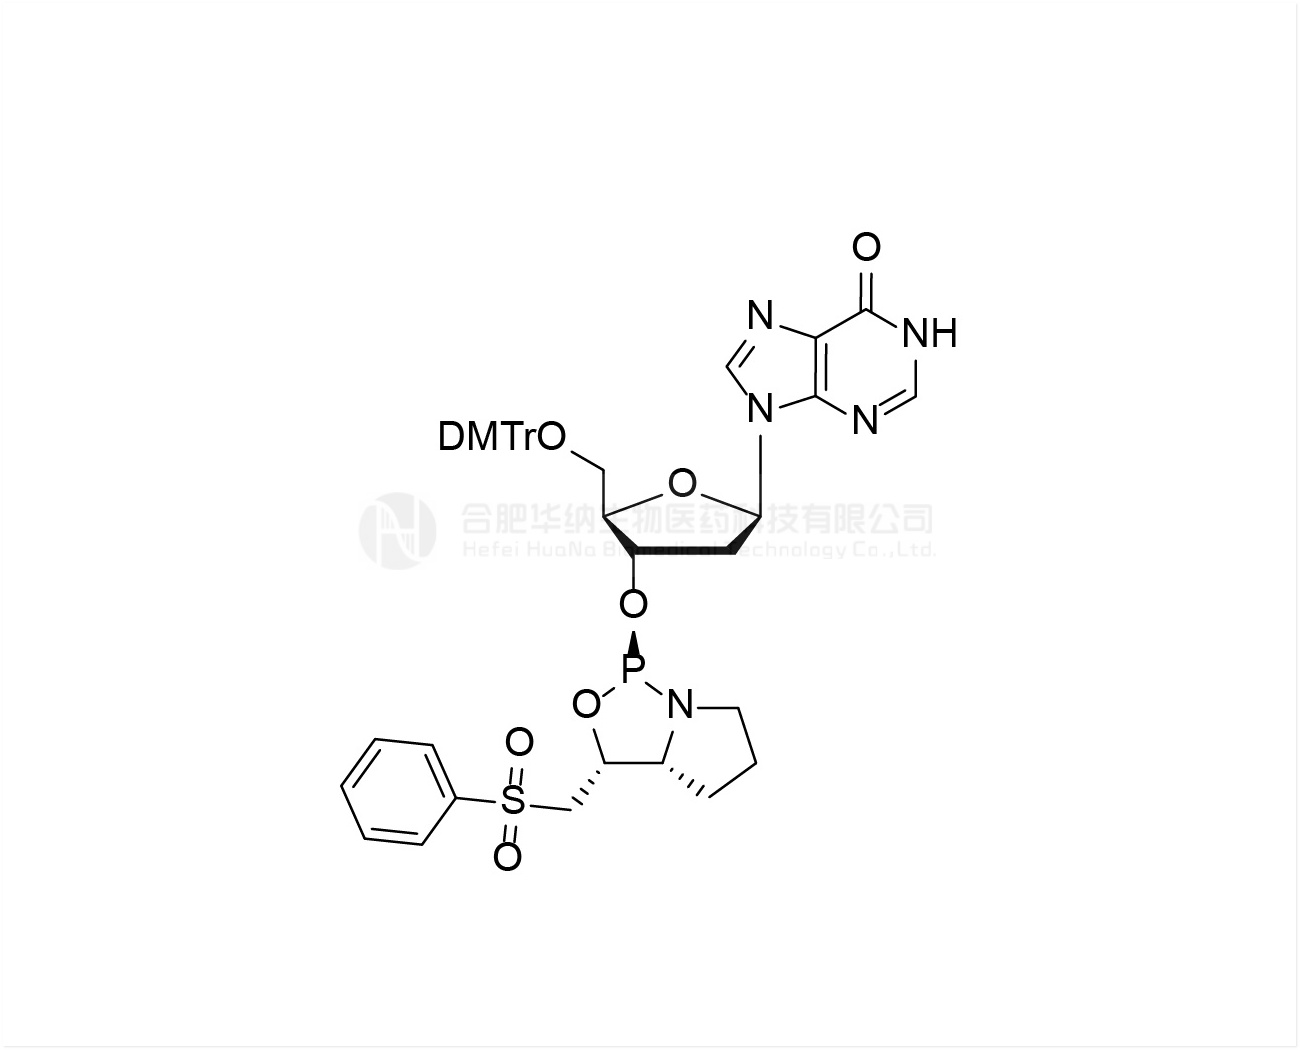 DMTr-dI-3'-(D)-PSM-Phosphoramidite